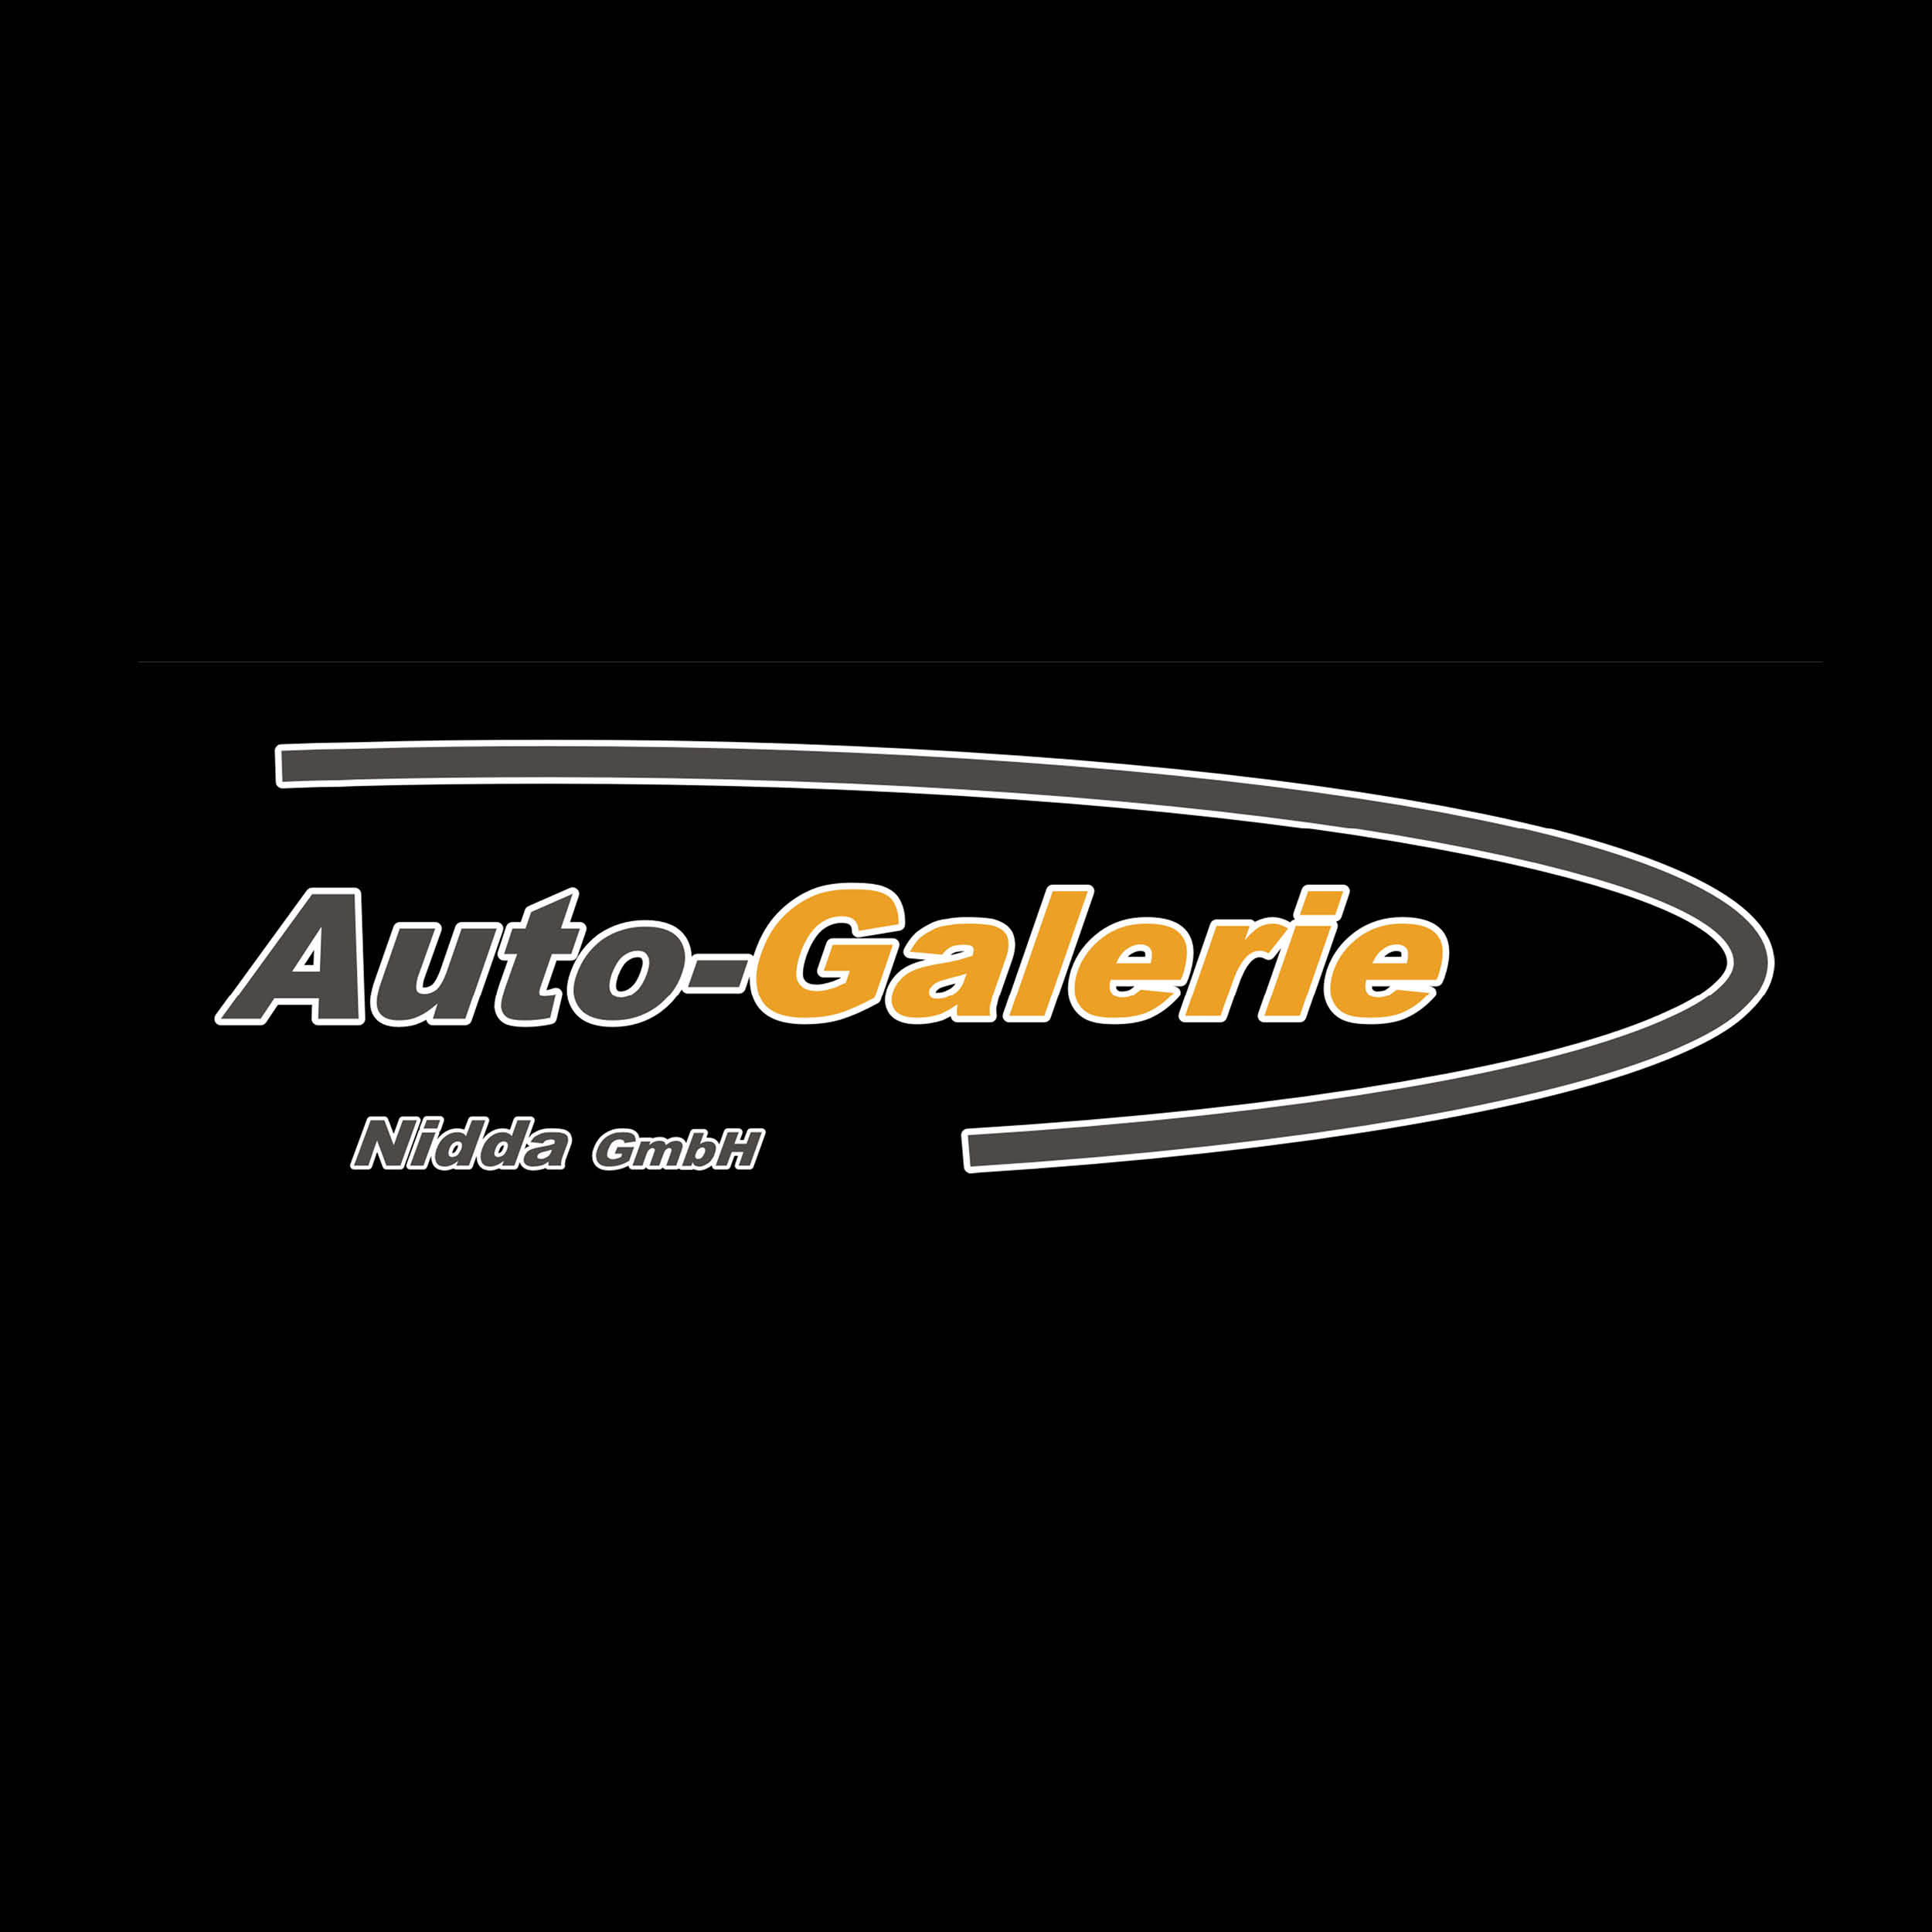 Auto-Galerie Nidda GmbH  